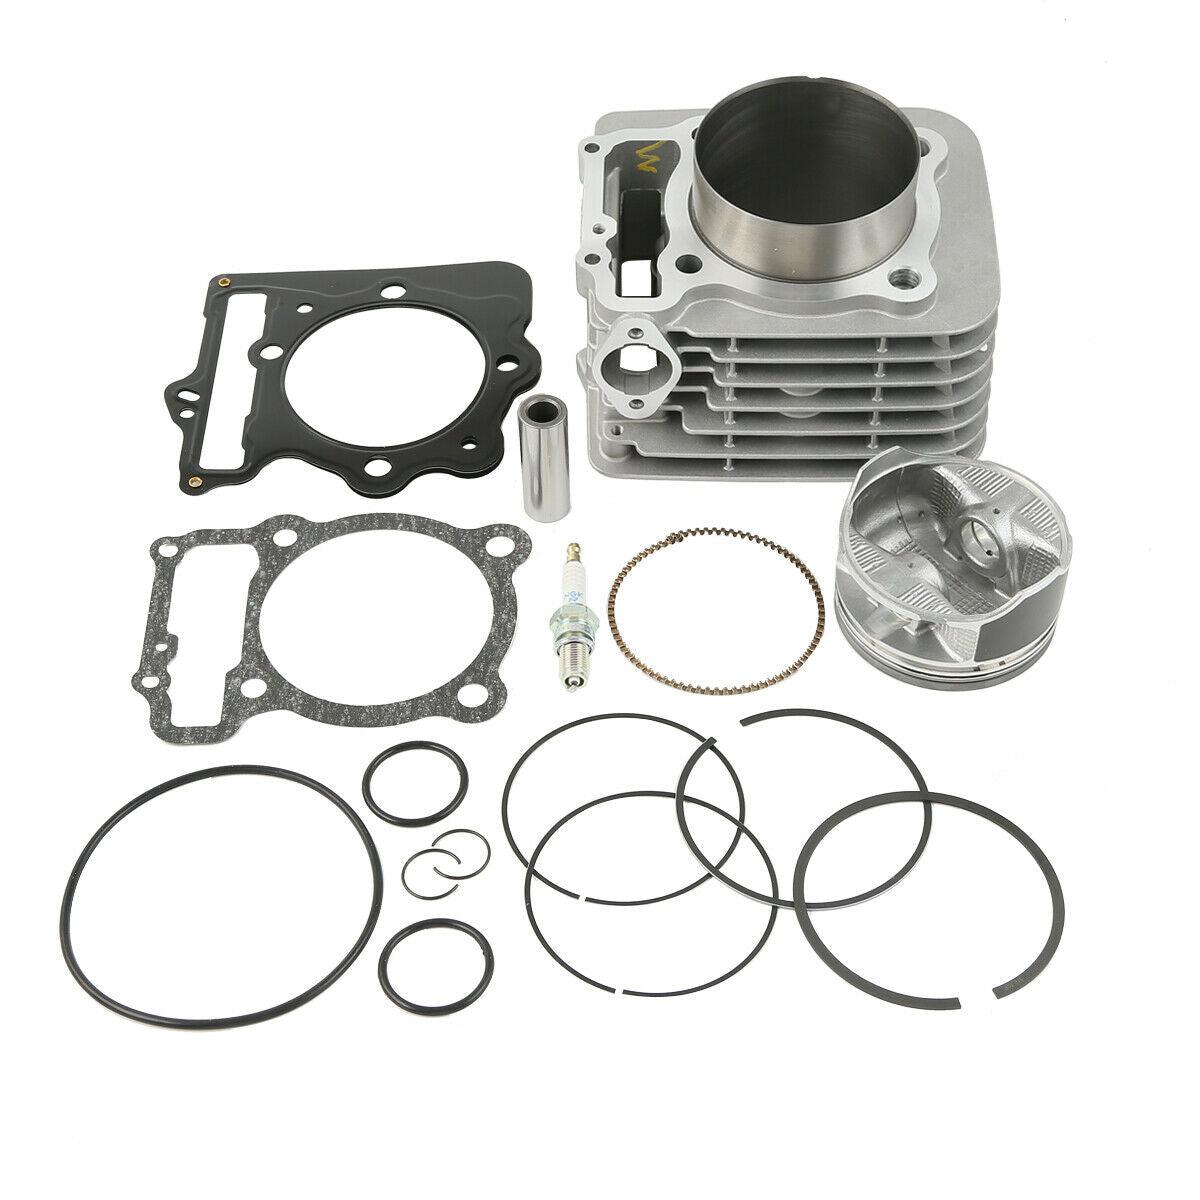 440cc Big Bore Cylinder Piston Gasket Kit Fit For Honda Sportrax TRX400EX 99-08 - Moto Life Products